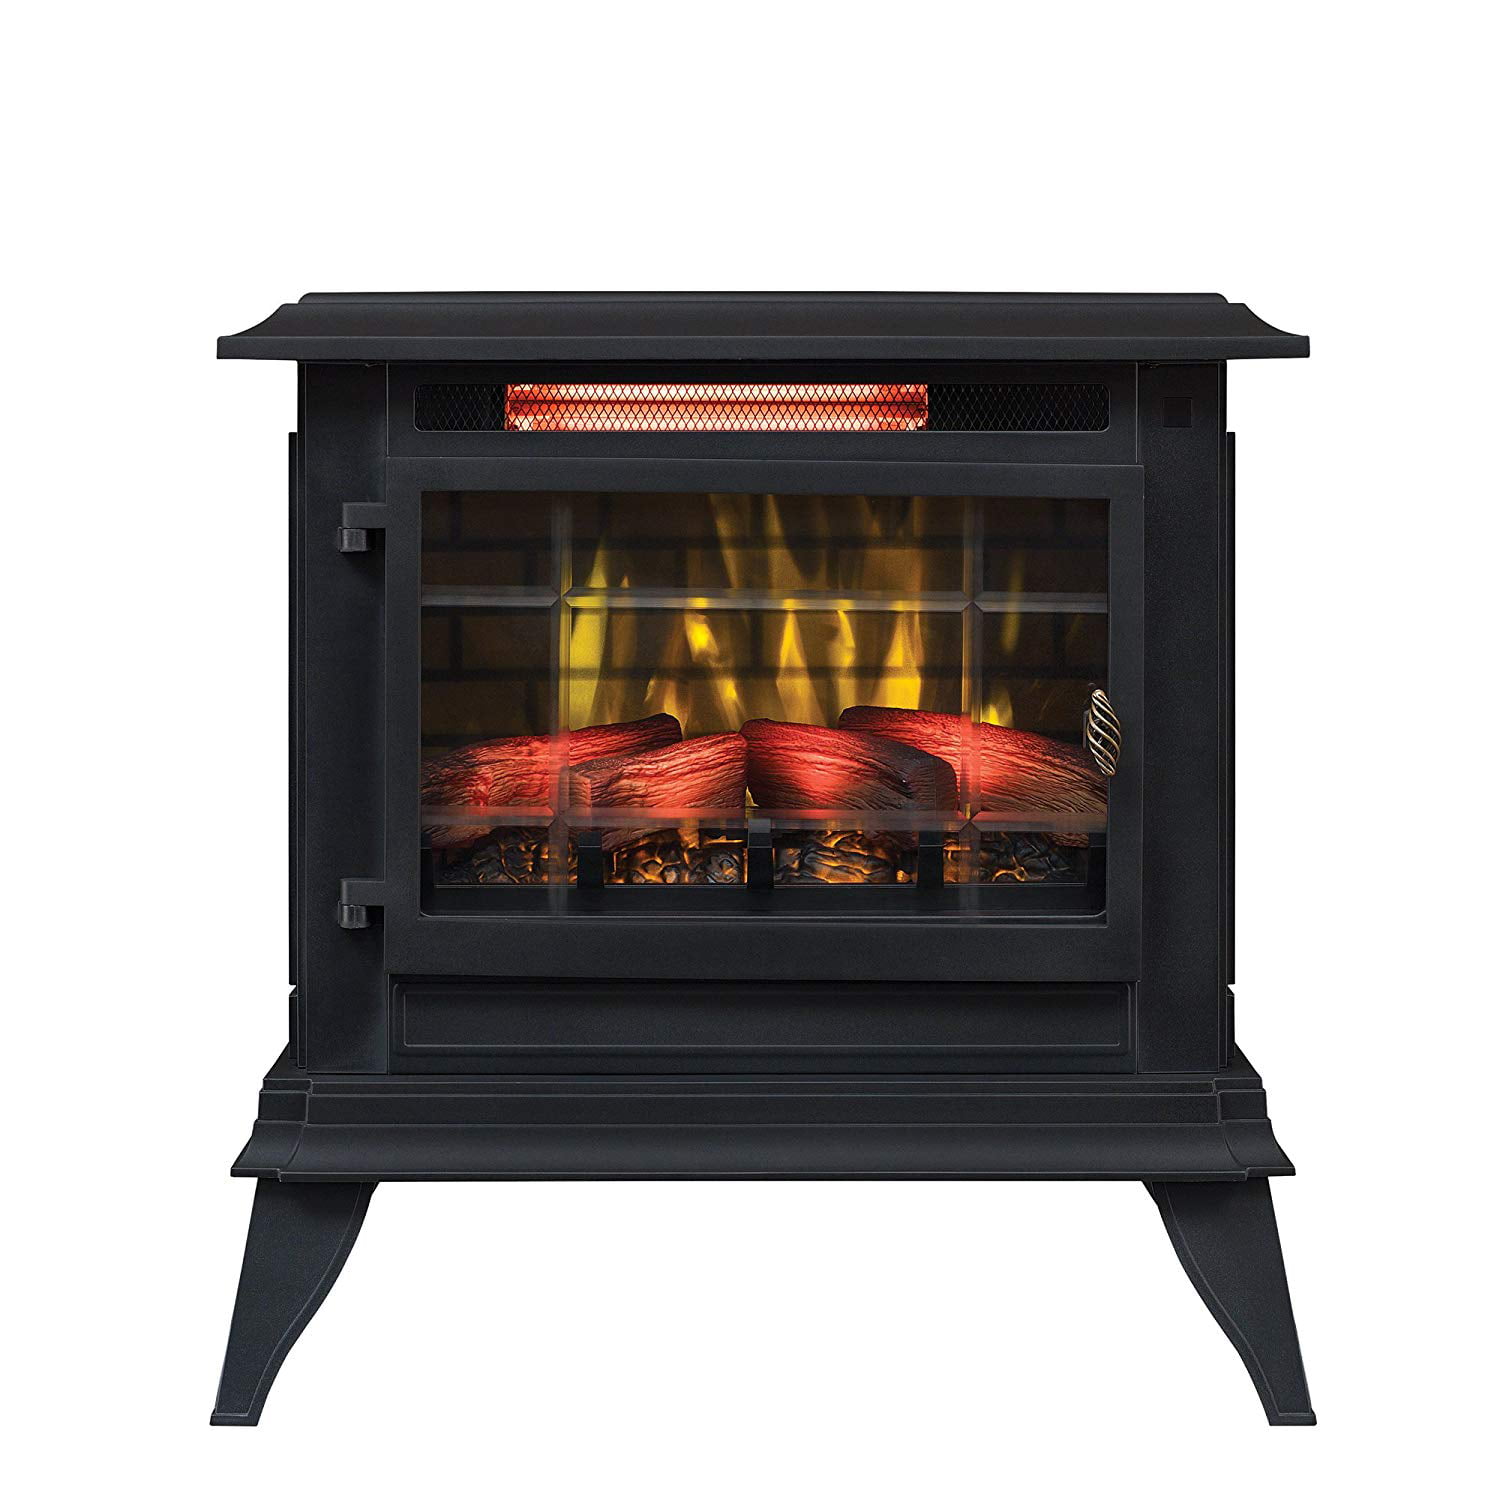 Duraflame Electric DFI-5020-01 Infrared Quartz Fireplace Stove Heater